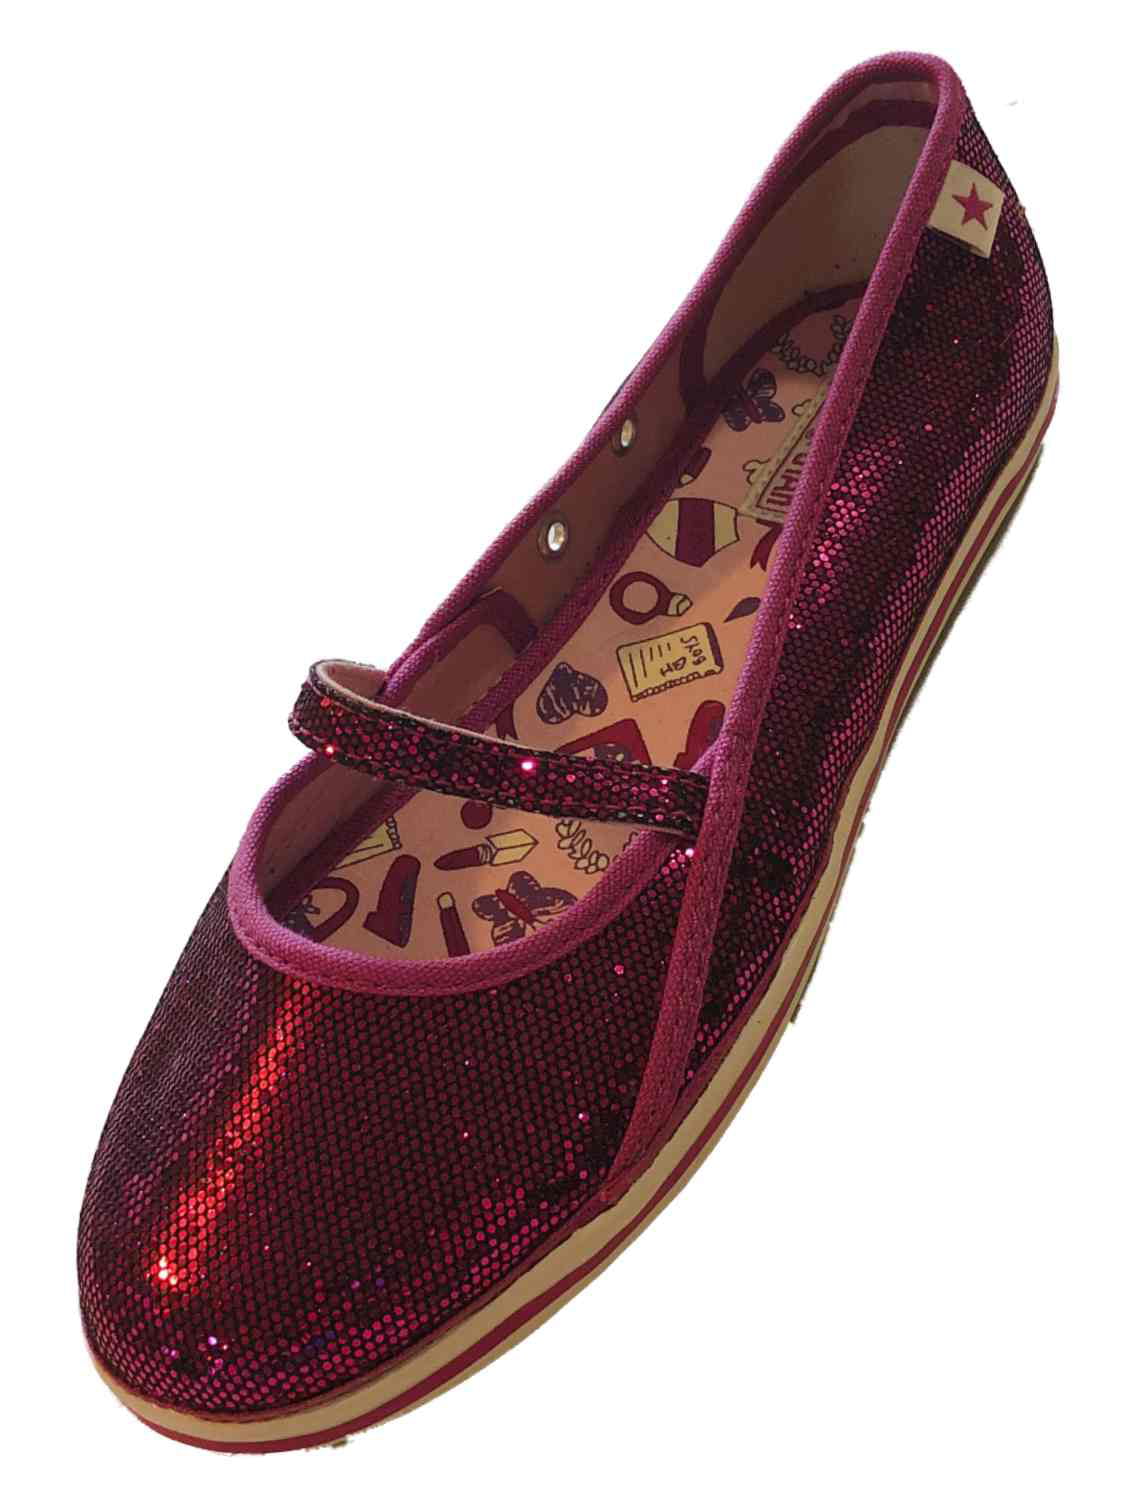 Converse Girls Pink Purple Glitter Canvas Tennis Shoes Mary Jane ...